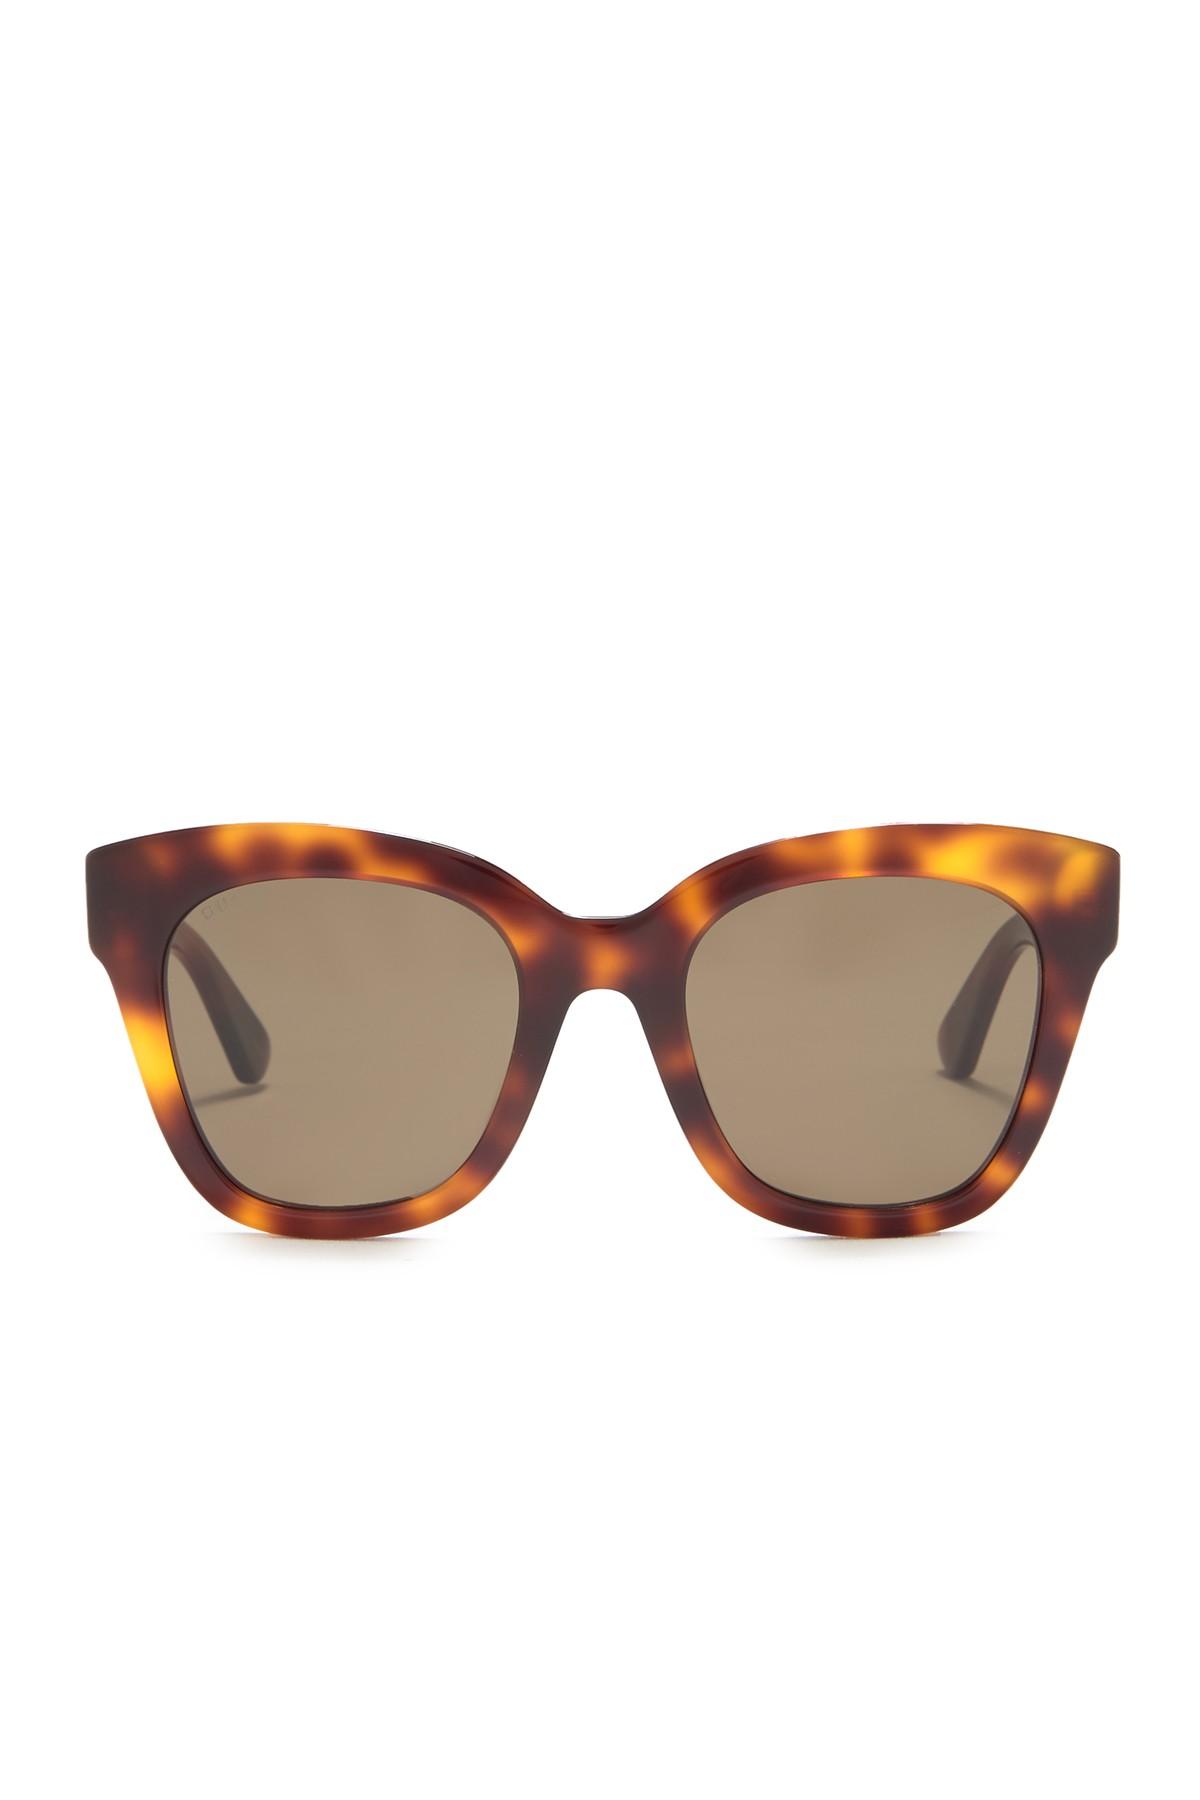 Gucci 50mm Square Cat Eye Sunglasses in 